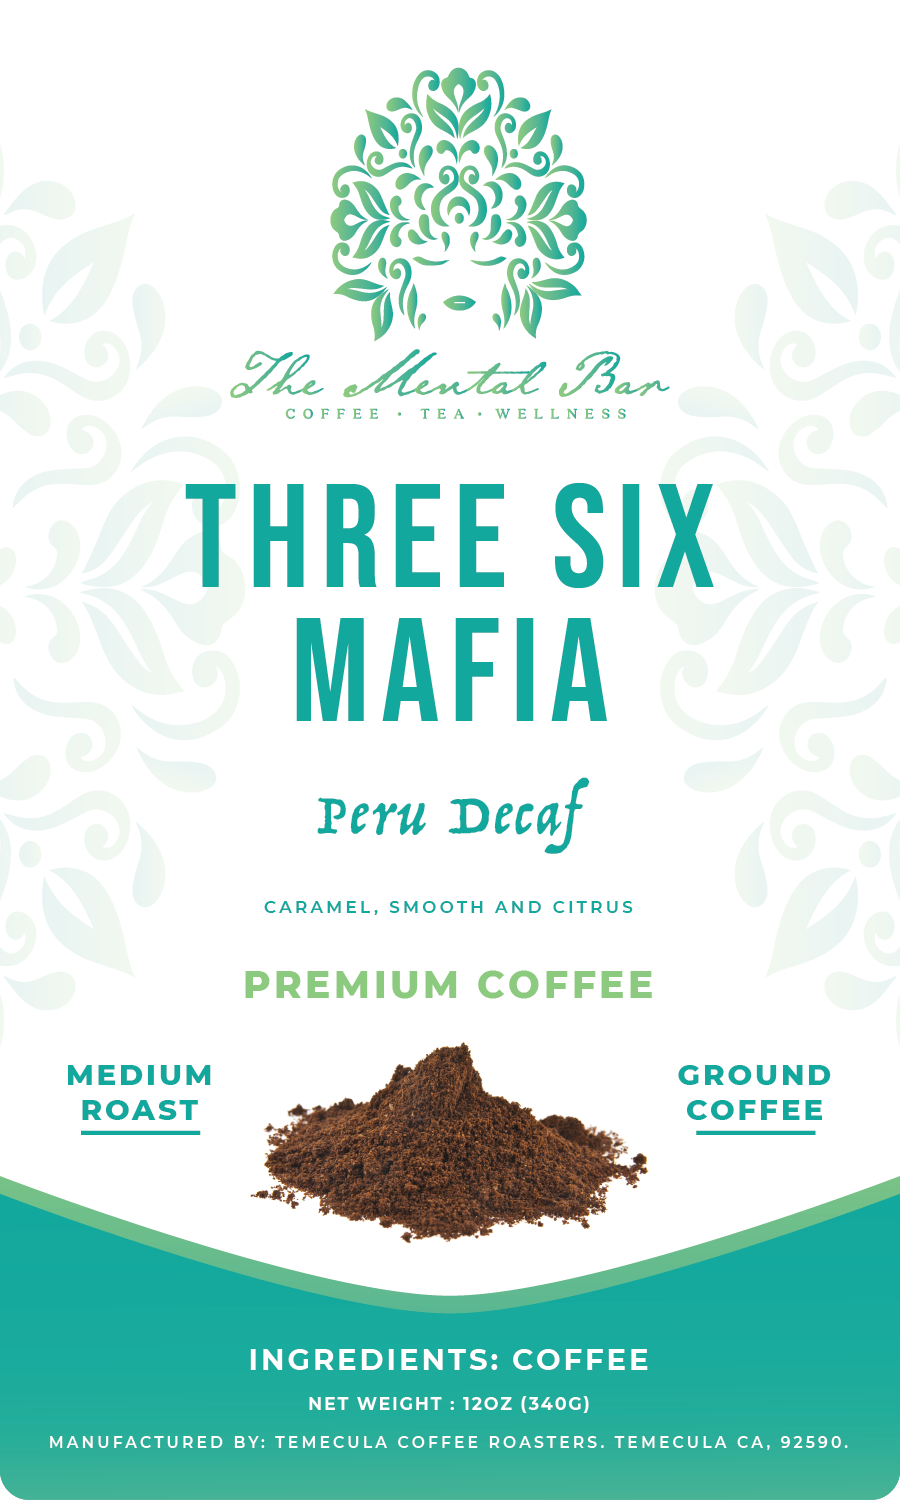 Three Six Mafia (Peru Decaf) - The Mental Bar